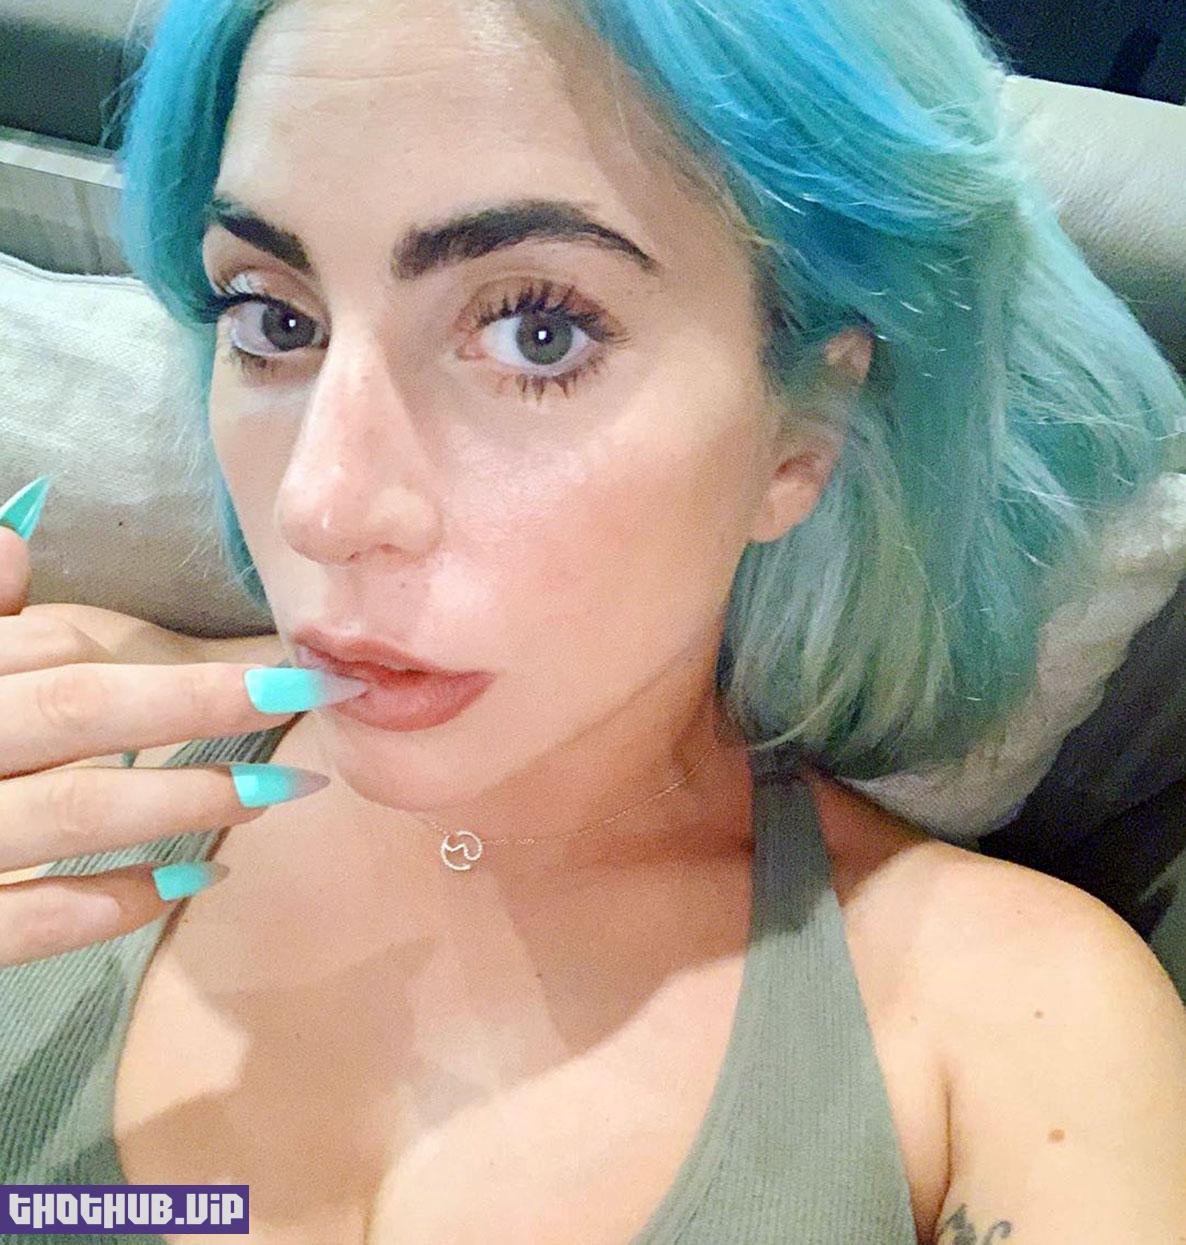 Lady Gaga Nude Photos Leaked